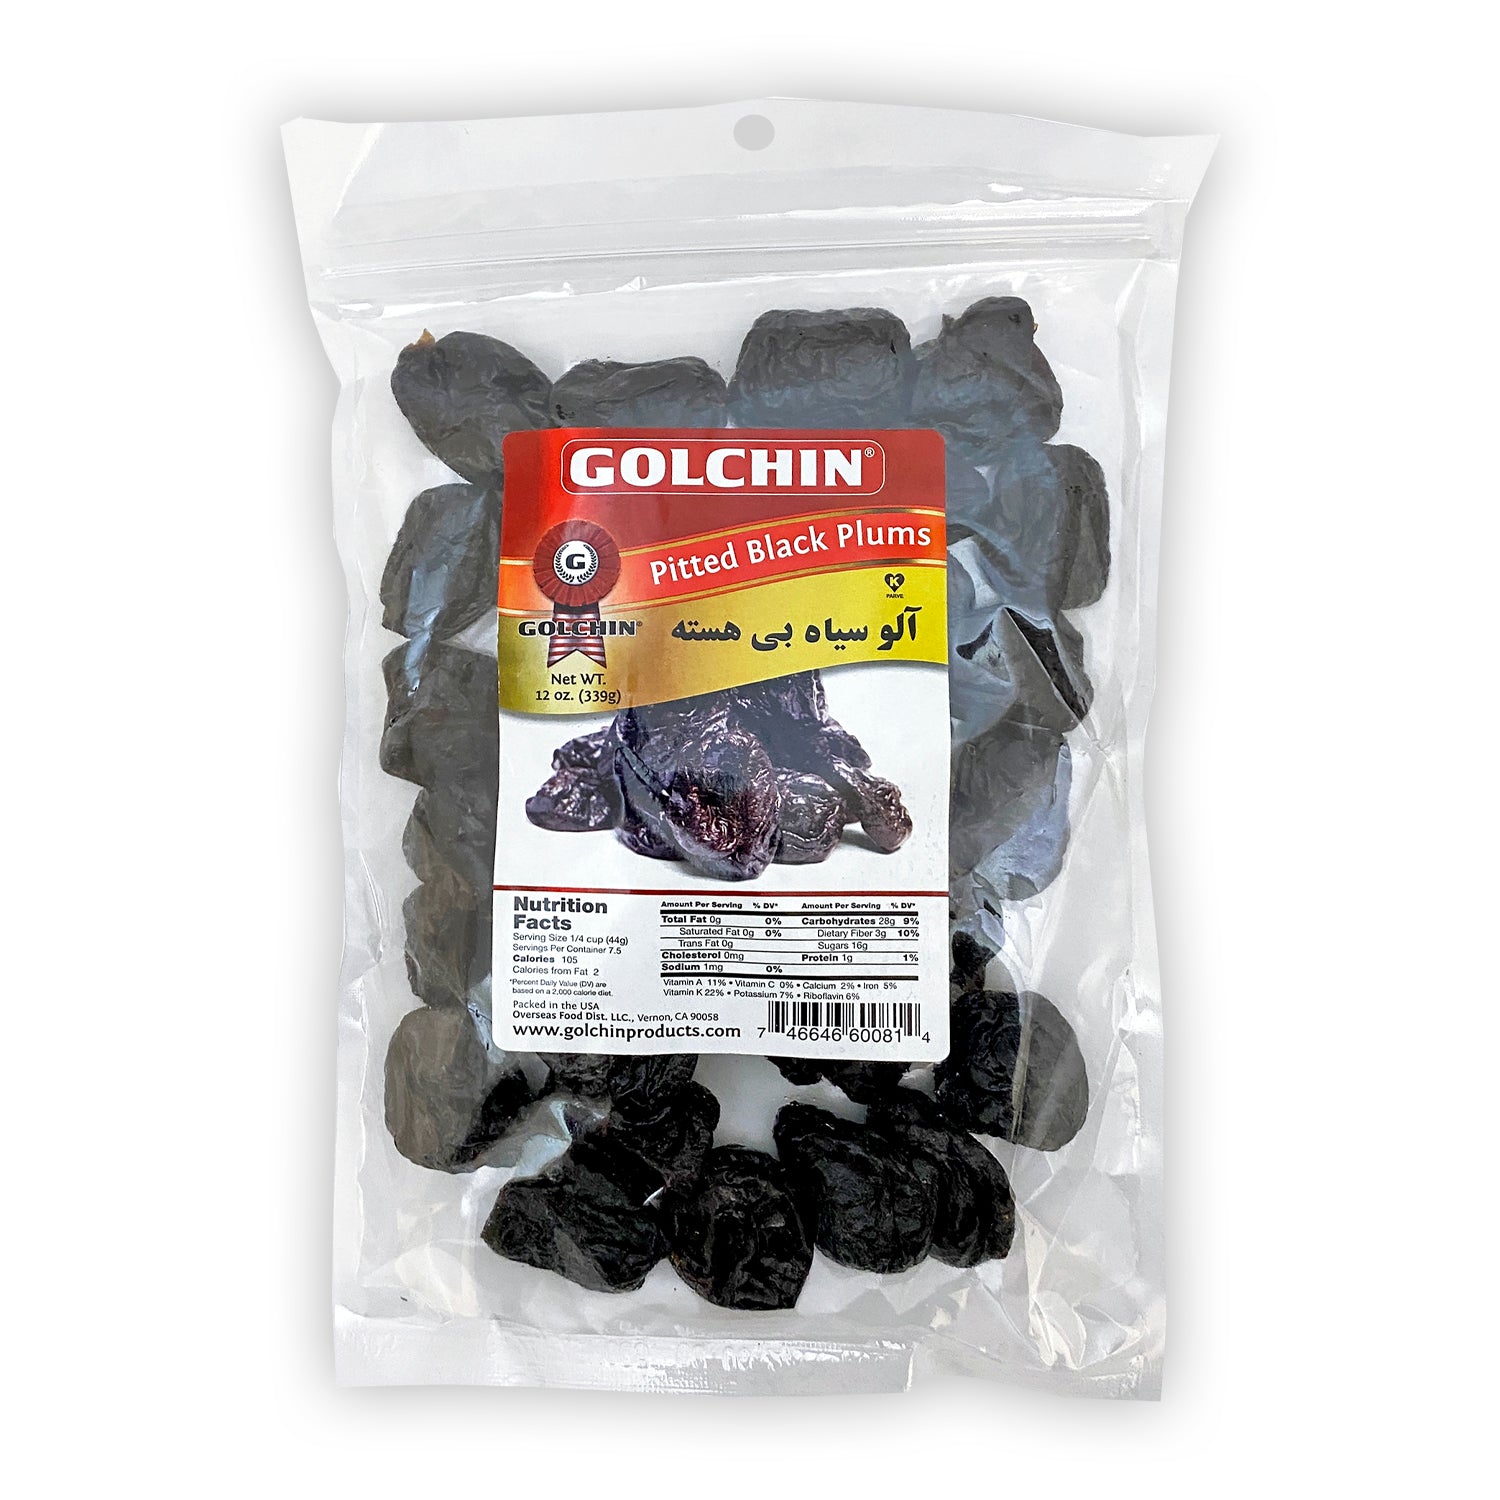 GOLCHIN PITTED BLACK PLUM